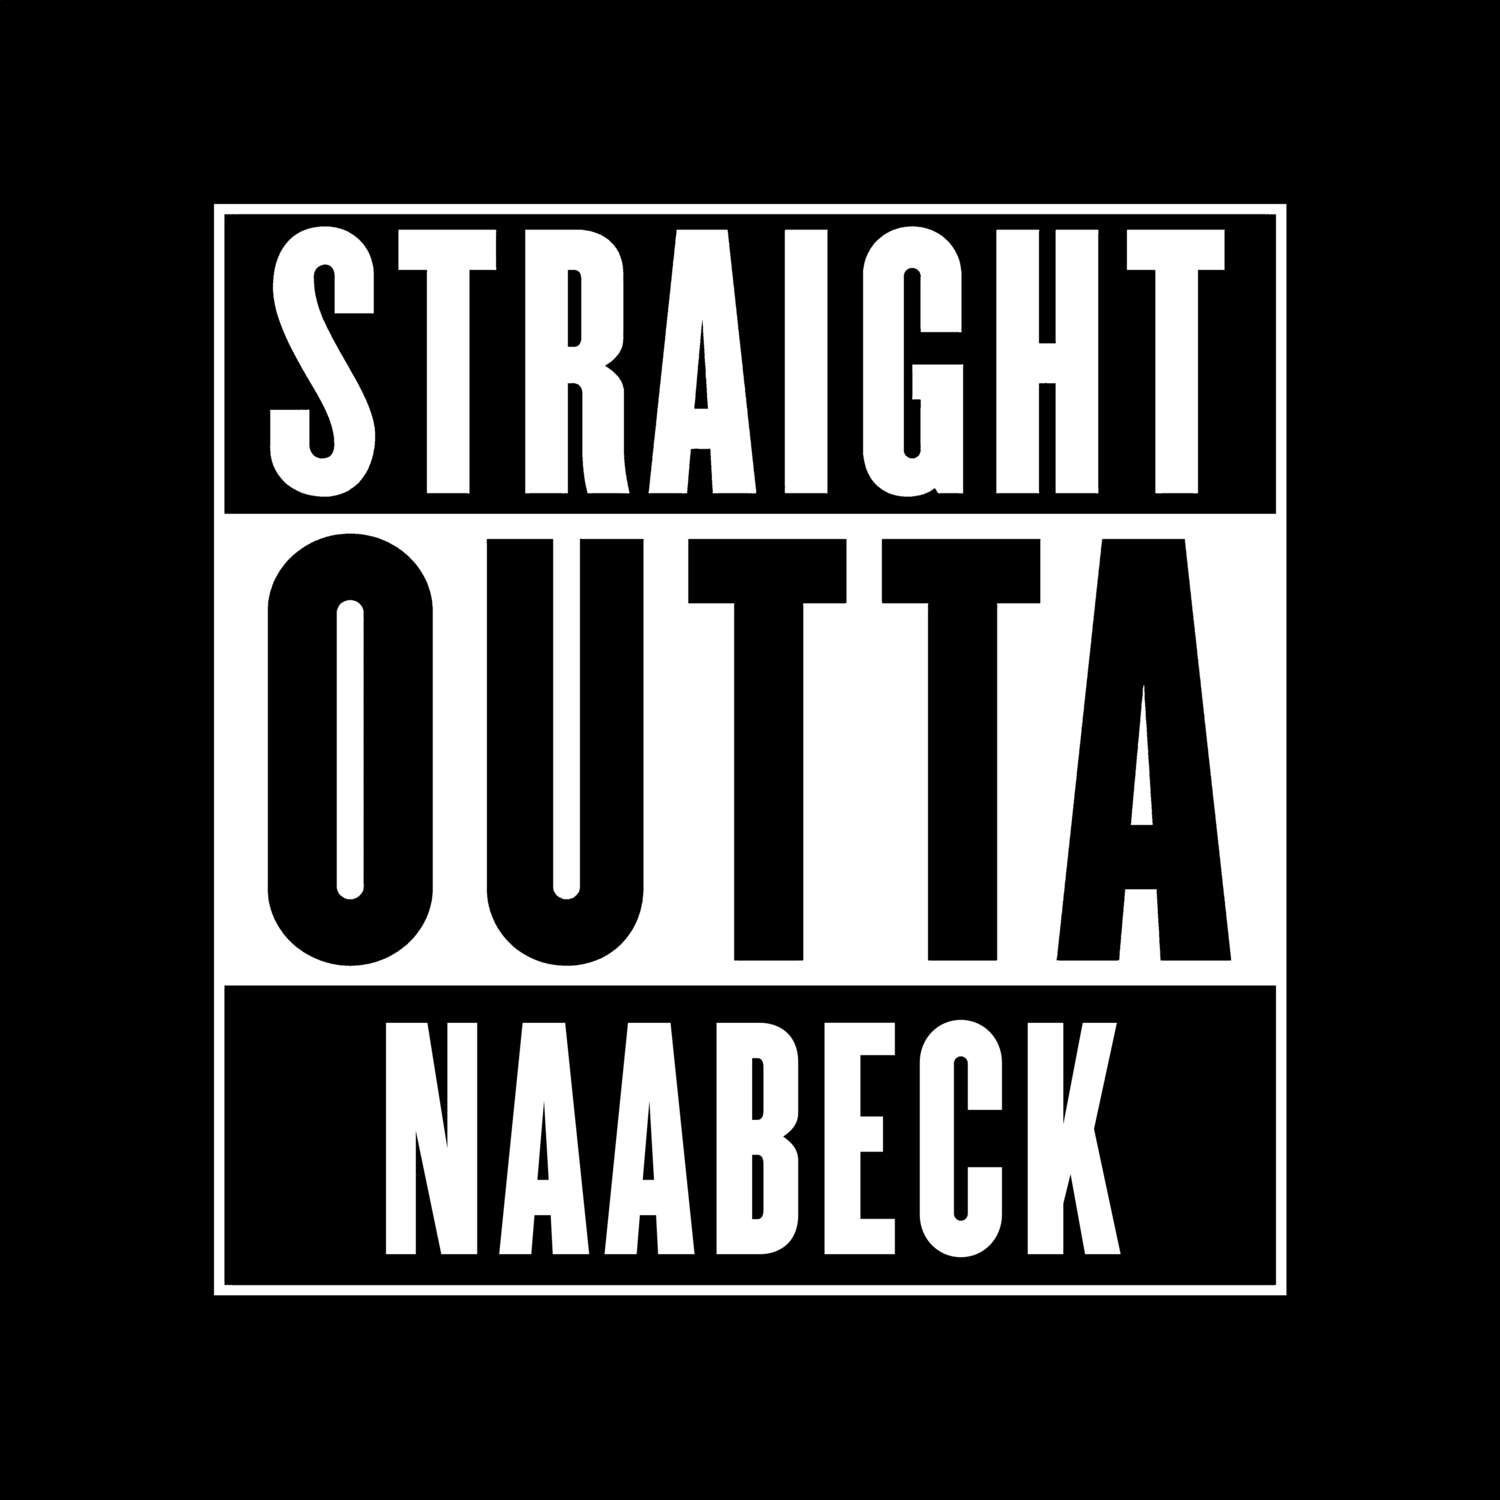 Naabeck T-Shirt »Straight Outta«